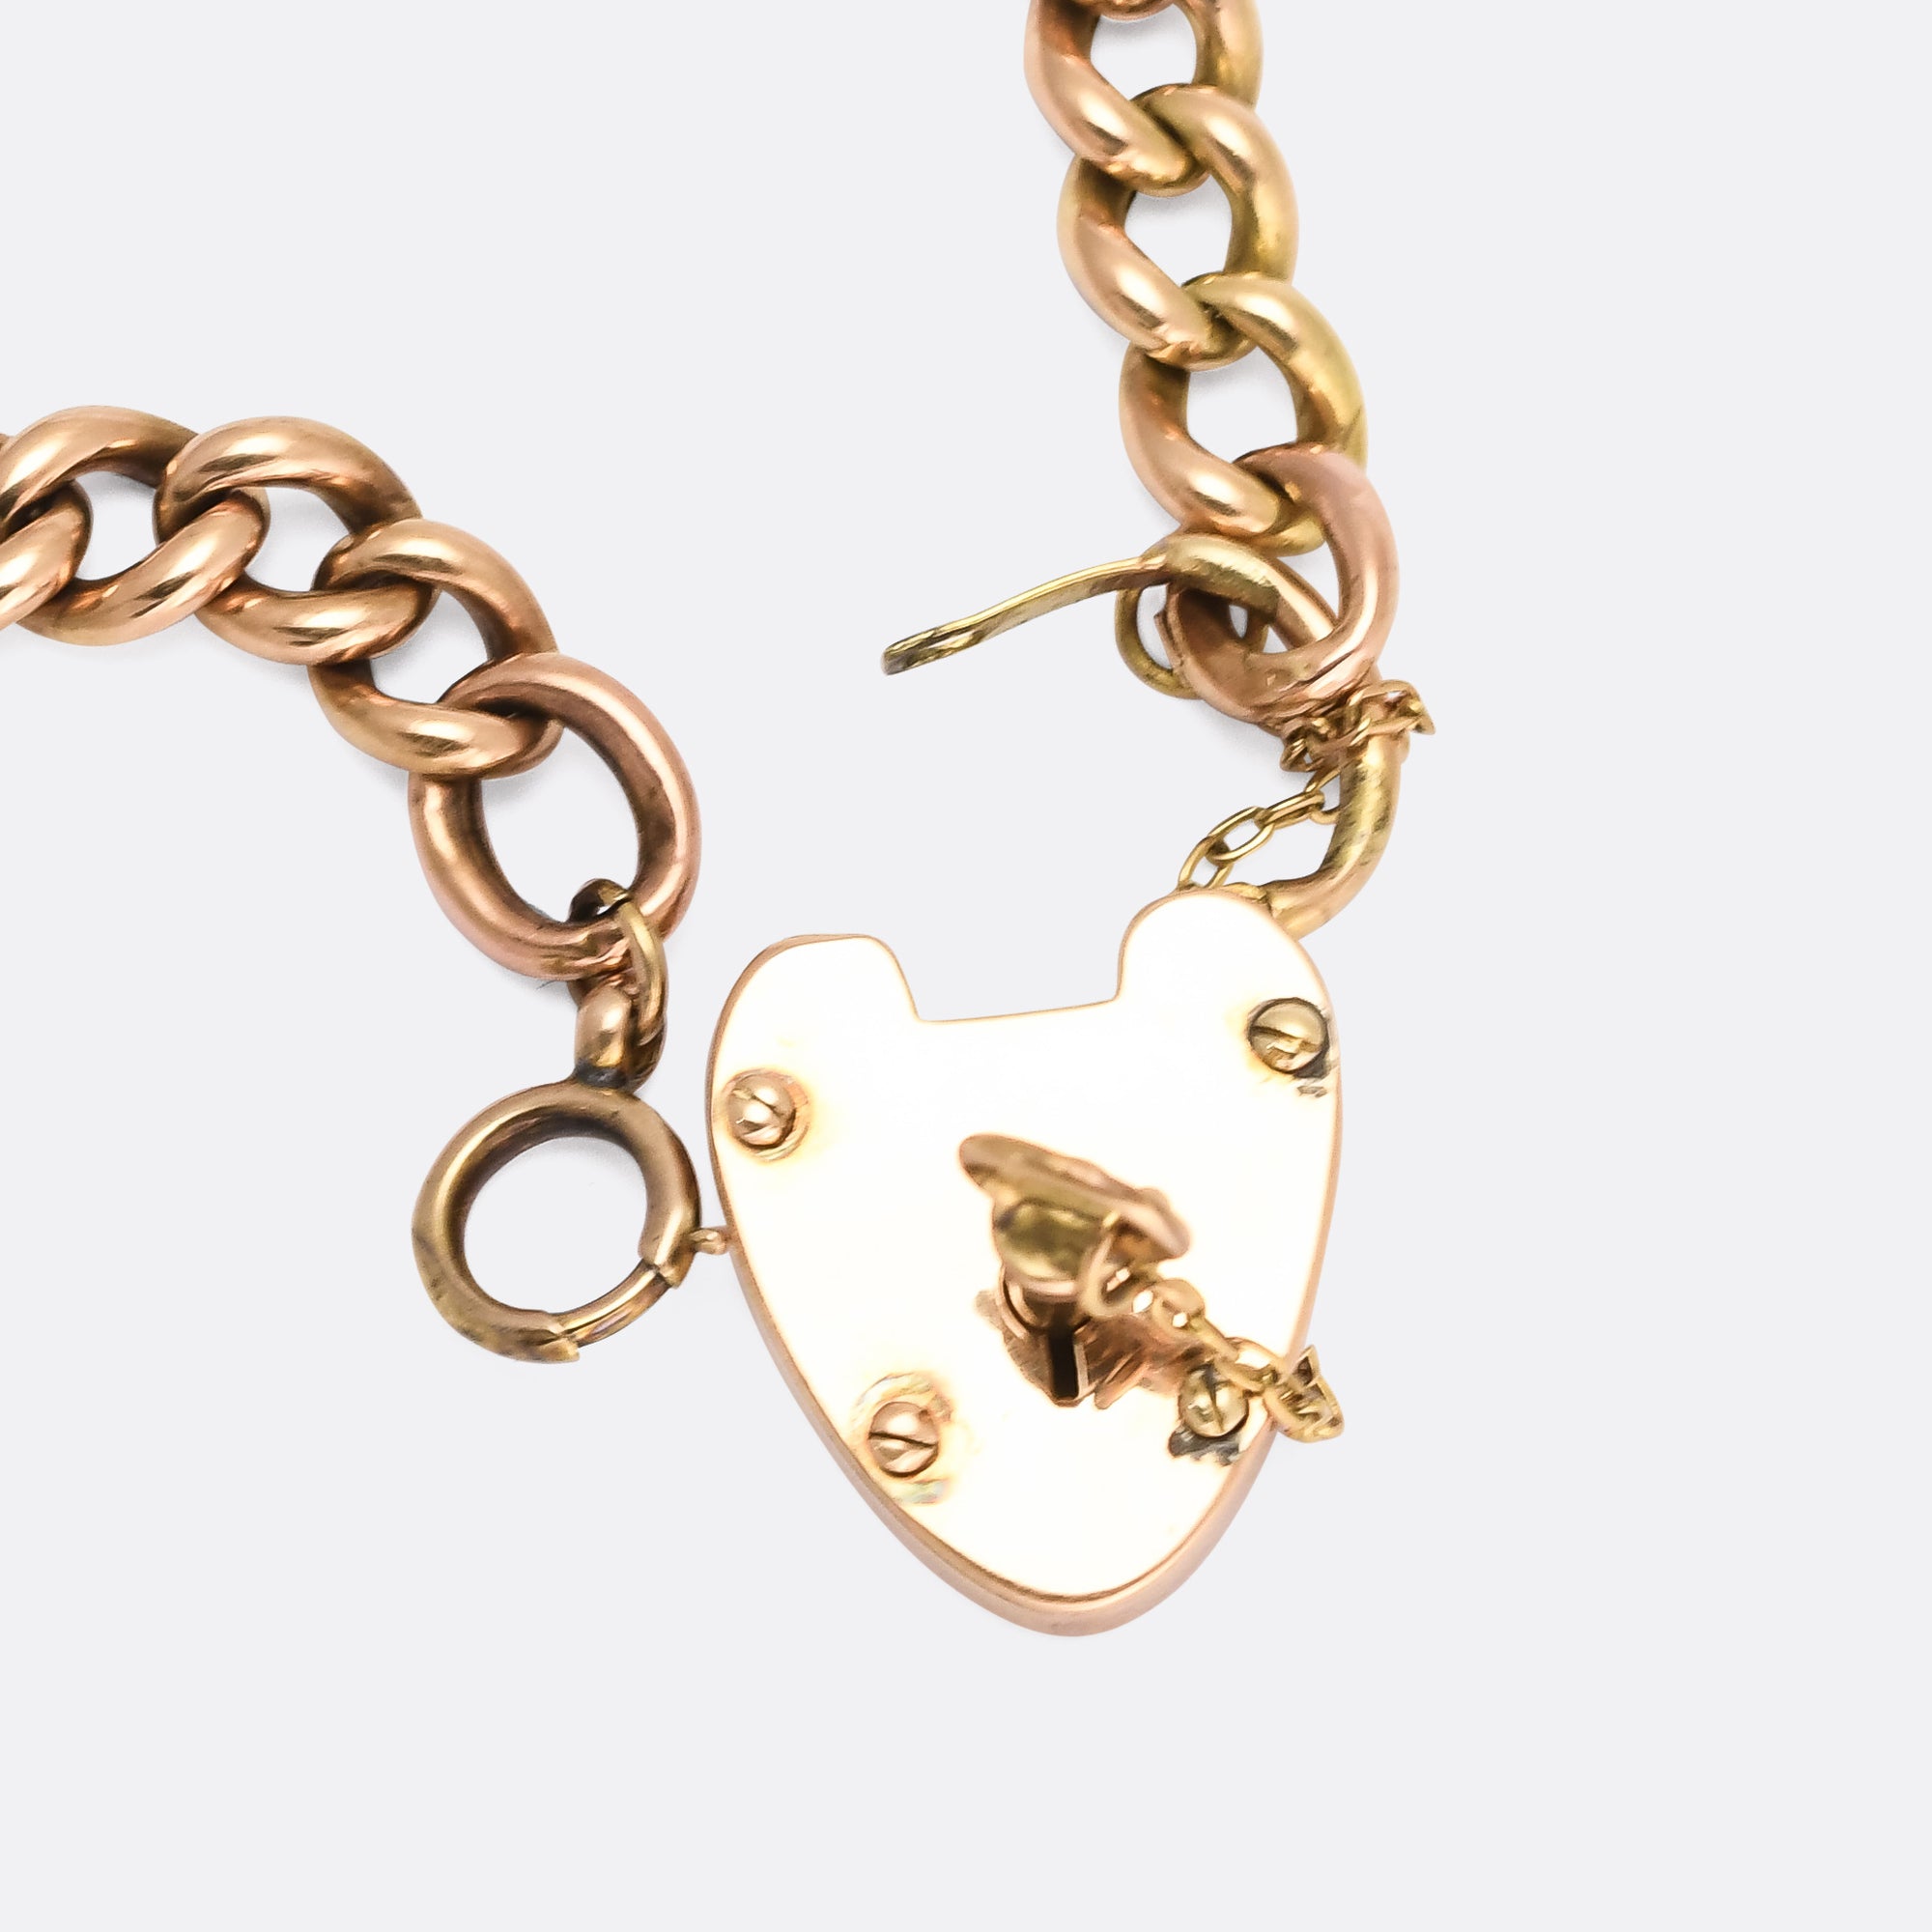 Lock Bracelet with Necklace | My Couple Goal